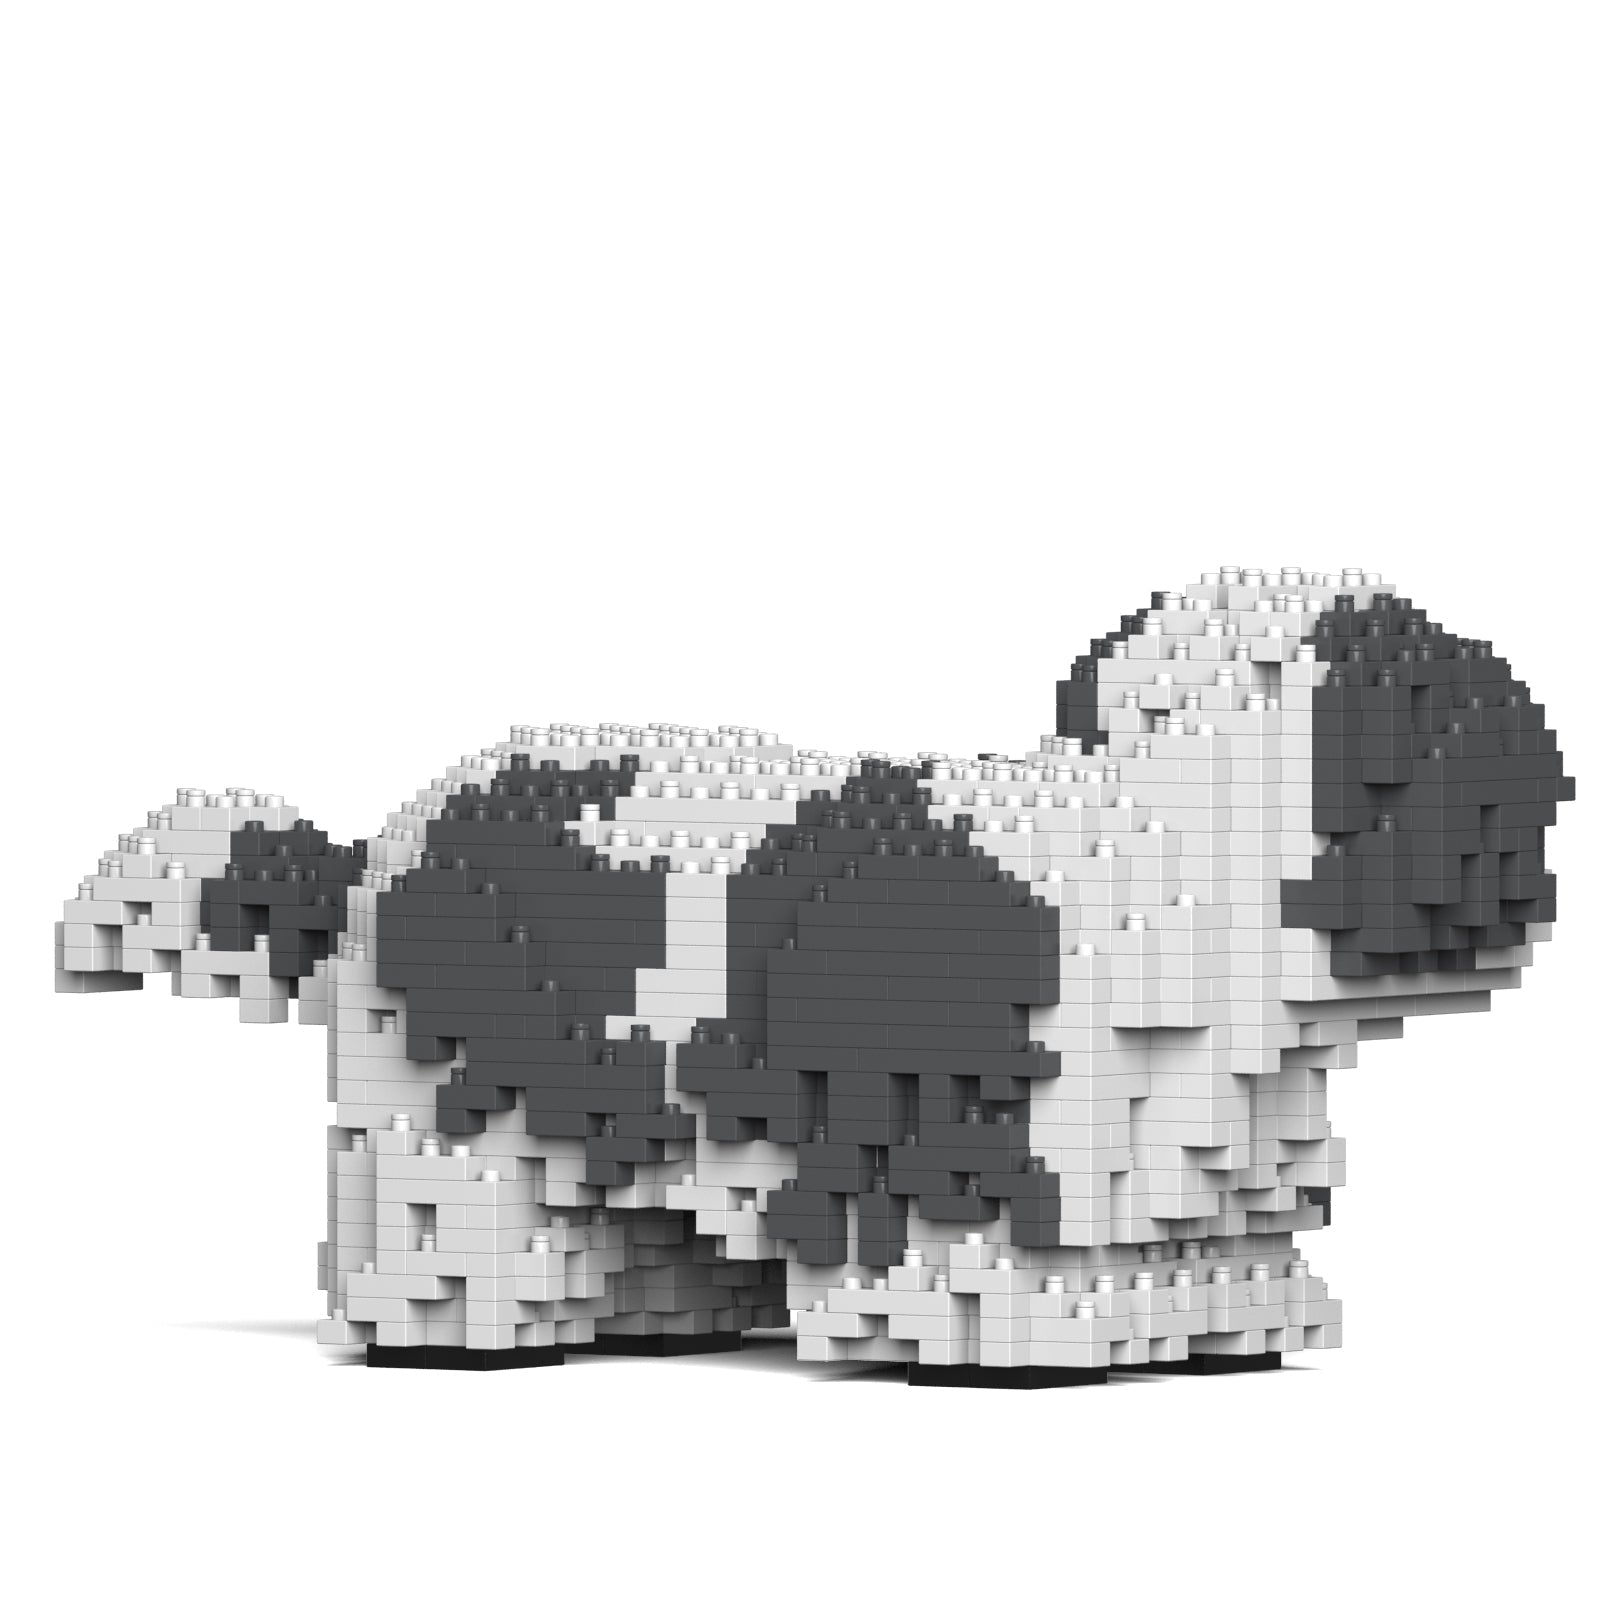 Jekca - Dachshund 01S-M02 - Lego - Sculpture - Construction - 4D